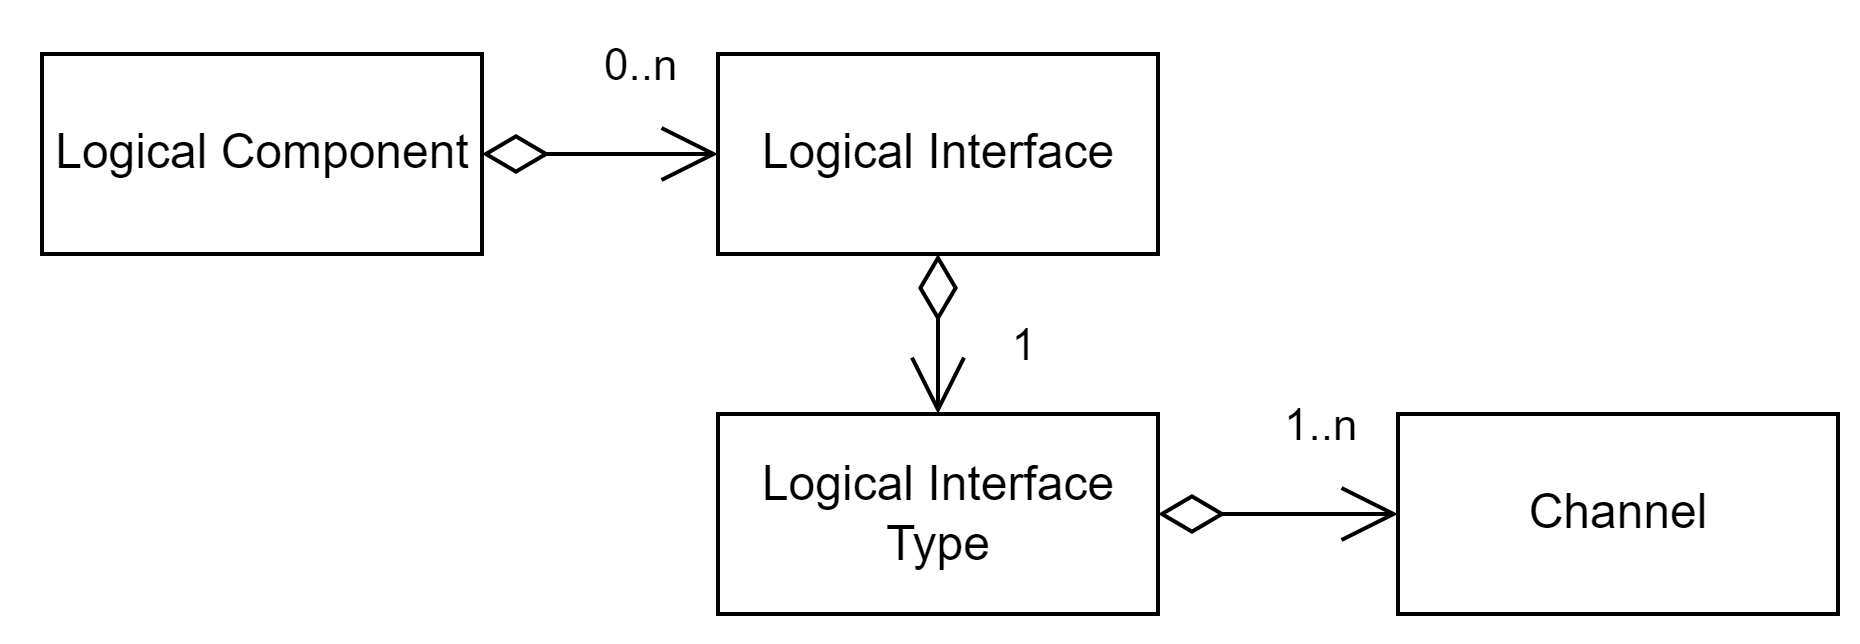 Logical Interface Type